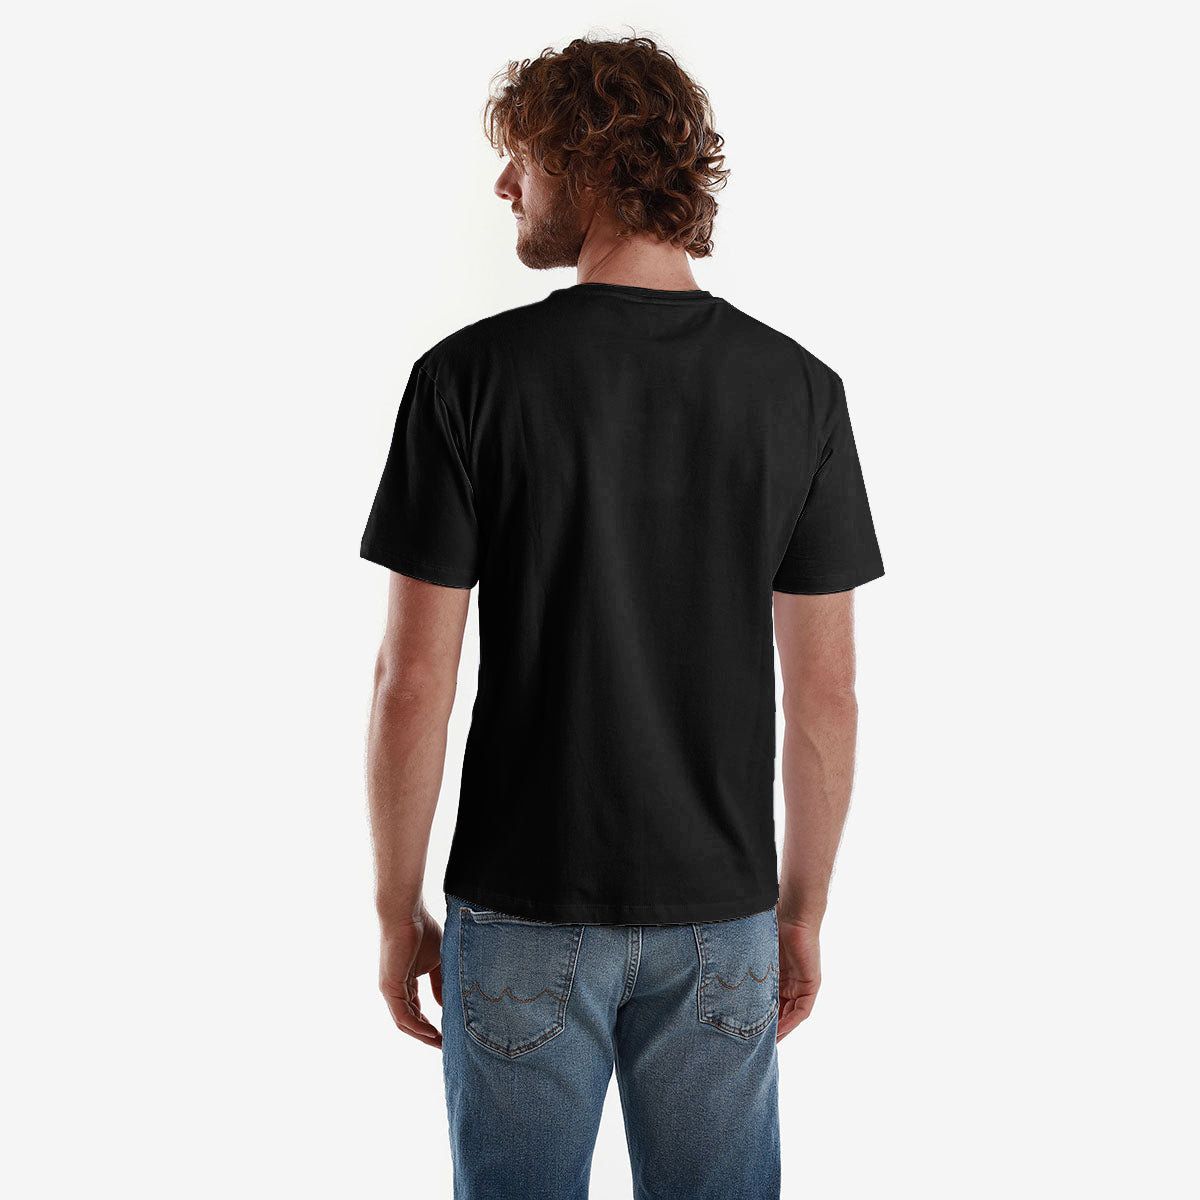 Camiseta Darphis negro unisexe - Imagen 3